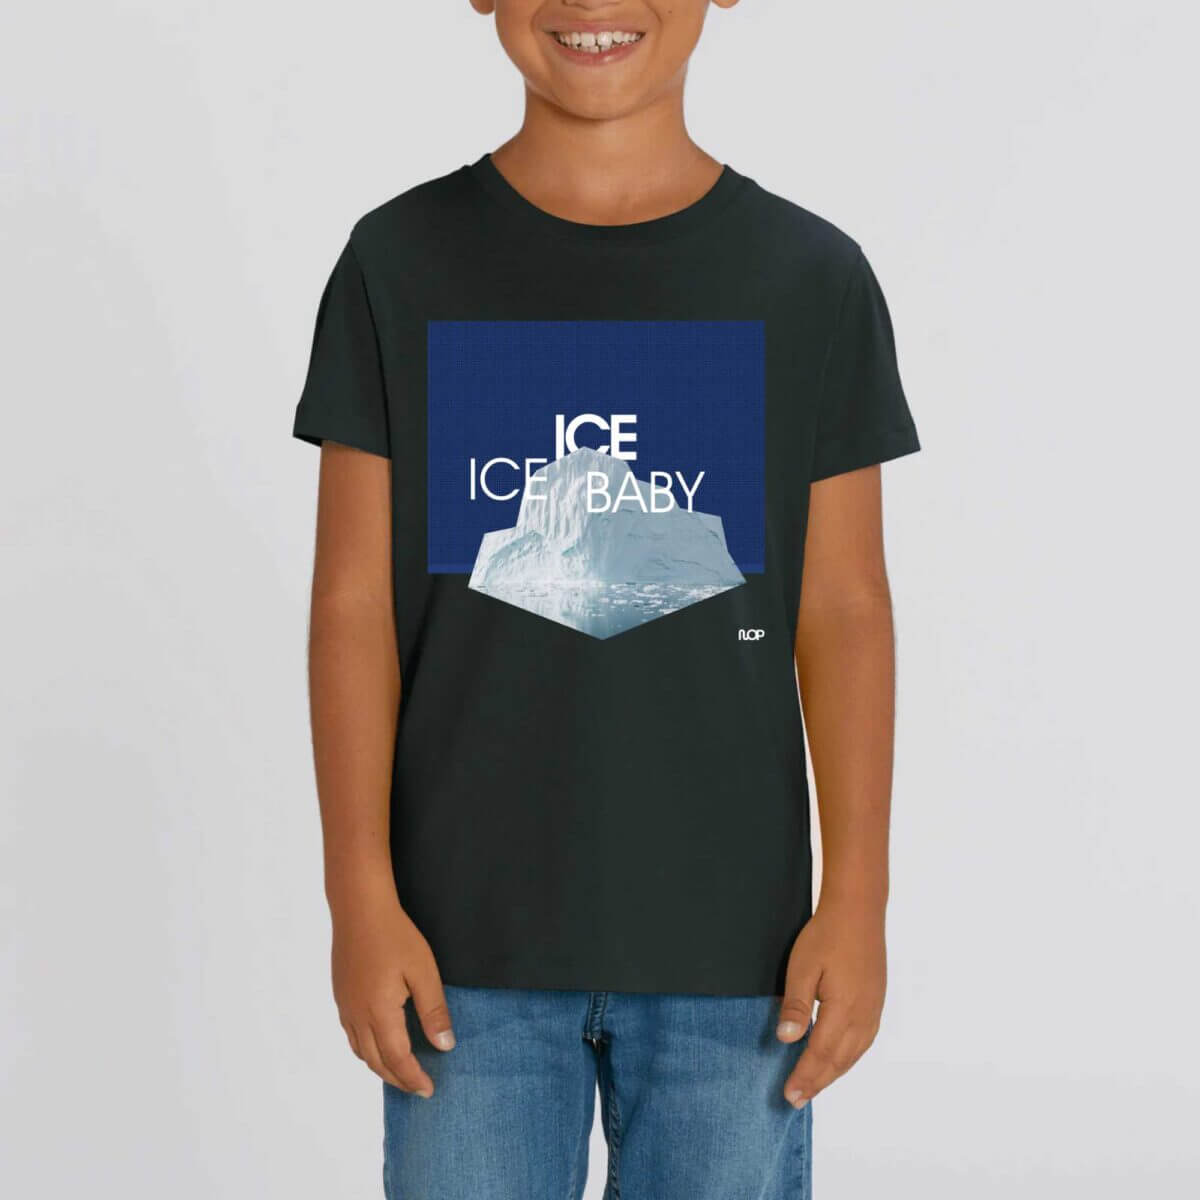 Messengers Kids Ice T-shirt